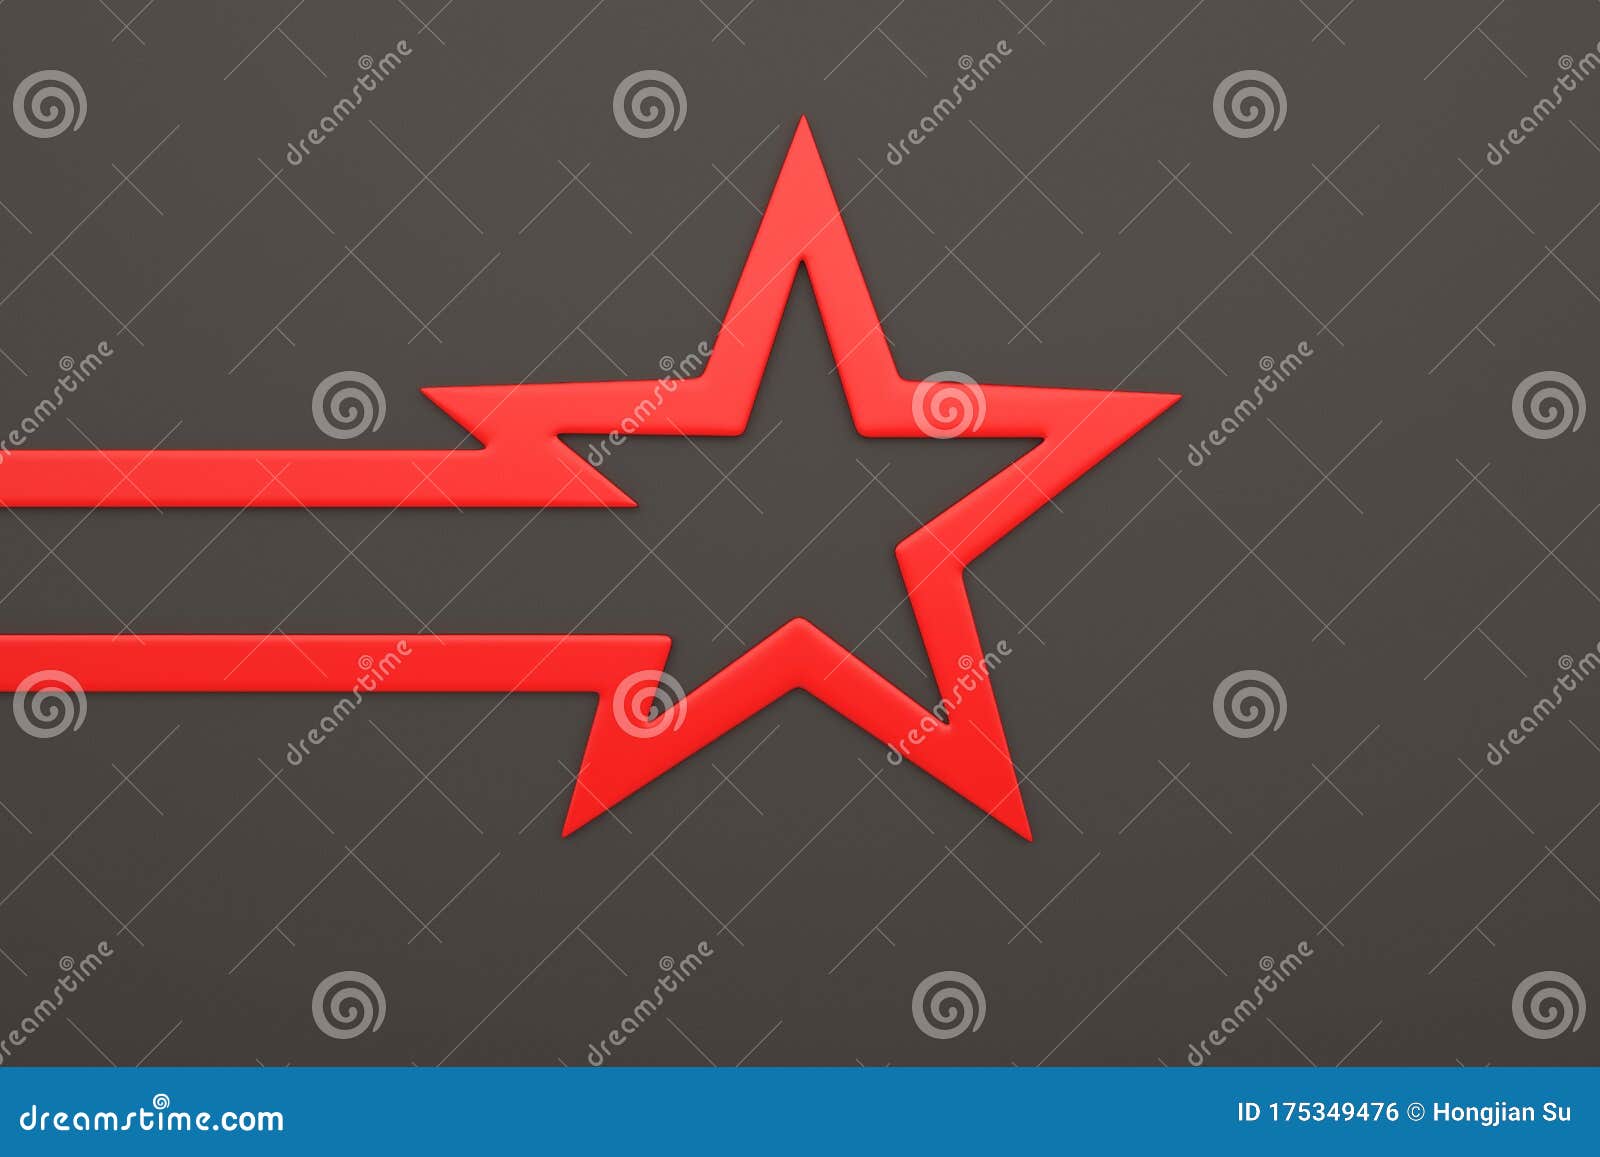 Red Star on Black Background. 3D Illustration Stock Illustration ...